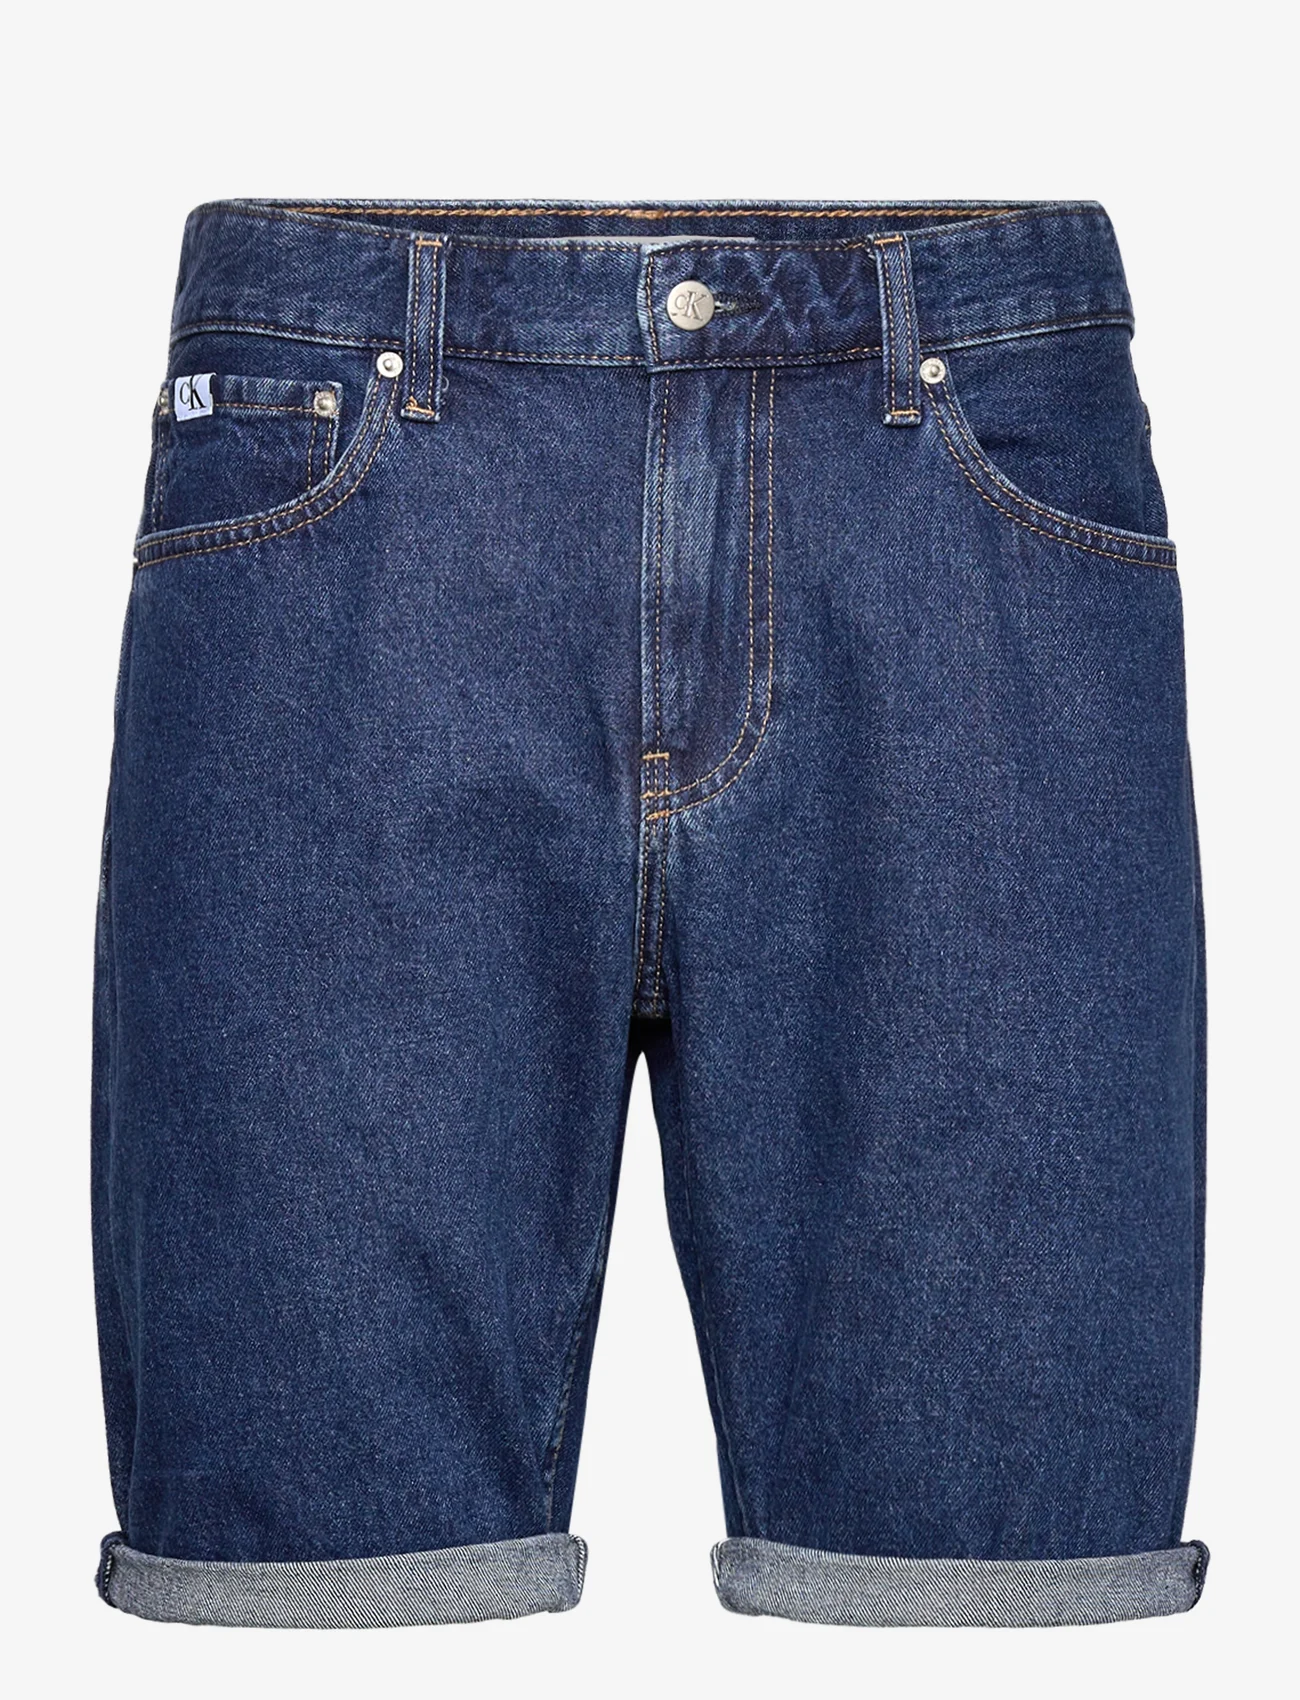 Calvin Klein Jeans - REGULAR SHORT - jeans shorts - denim dark - 0